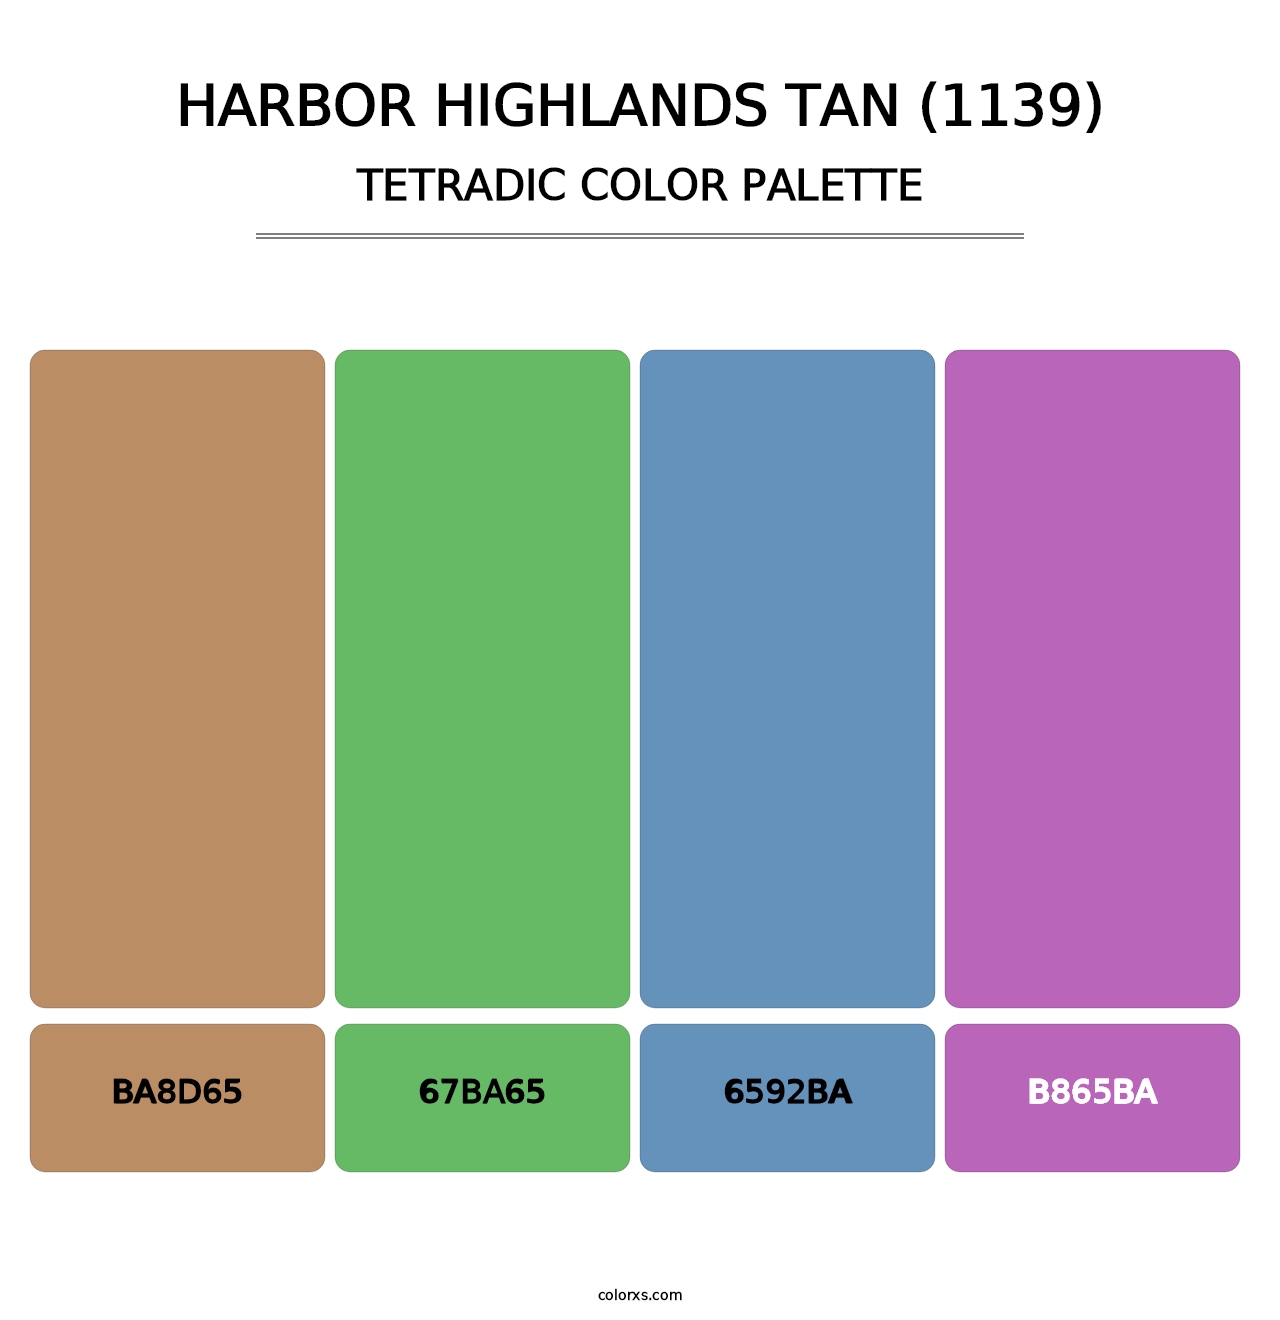 Harbor Highlands Tan (1139) - Tetradic Color Palette